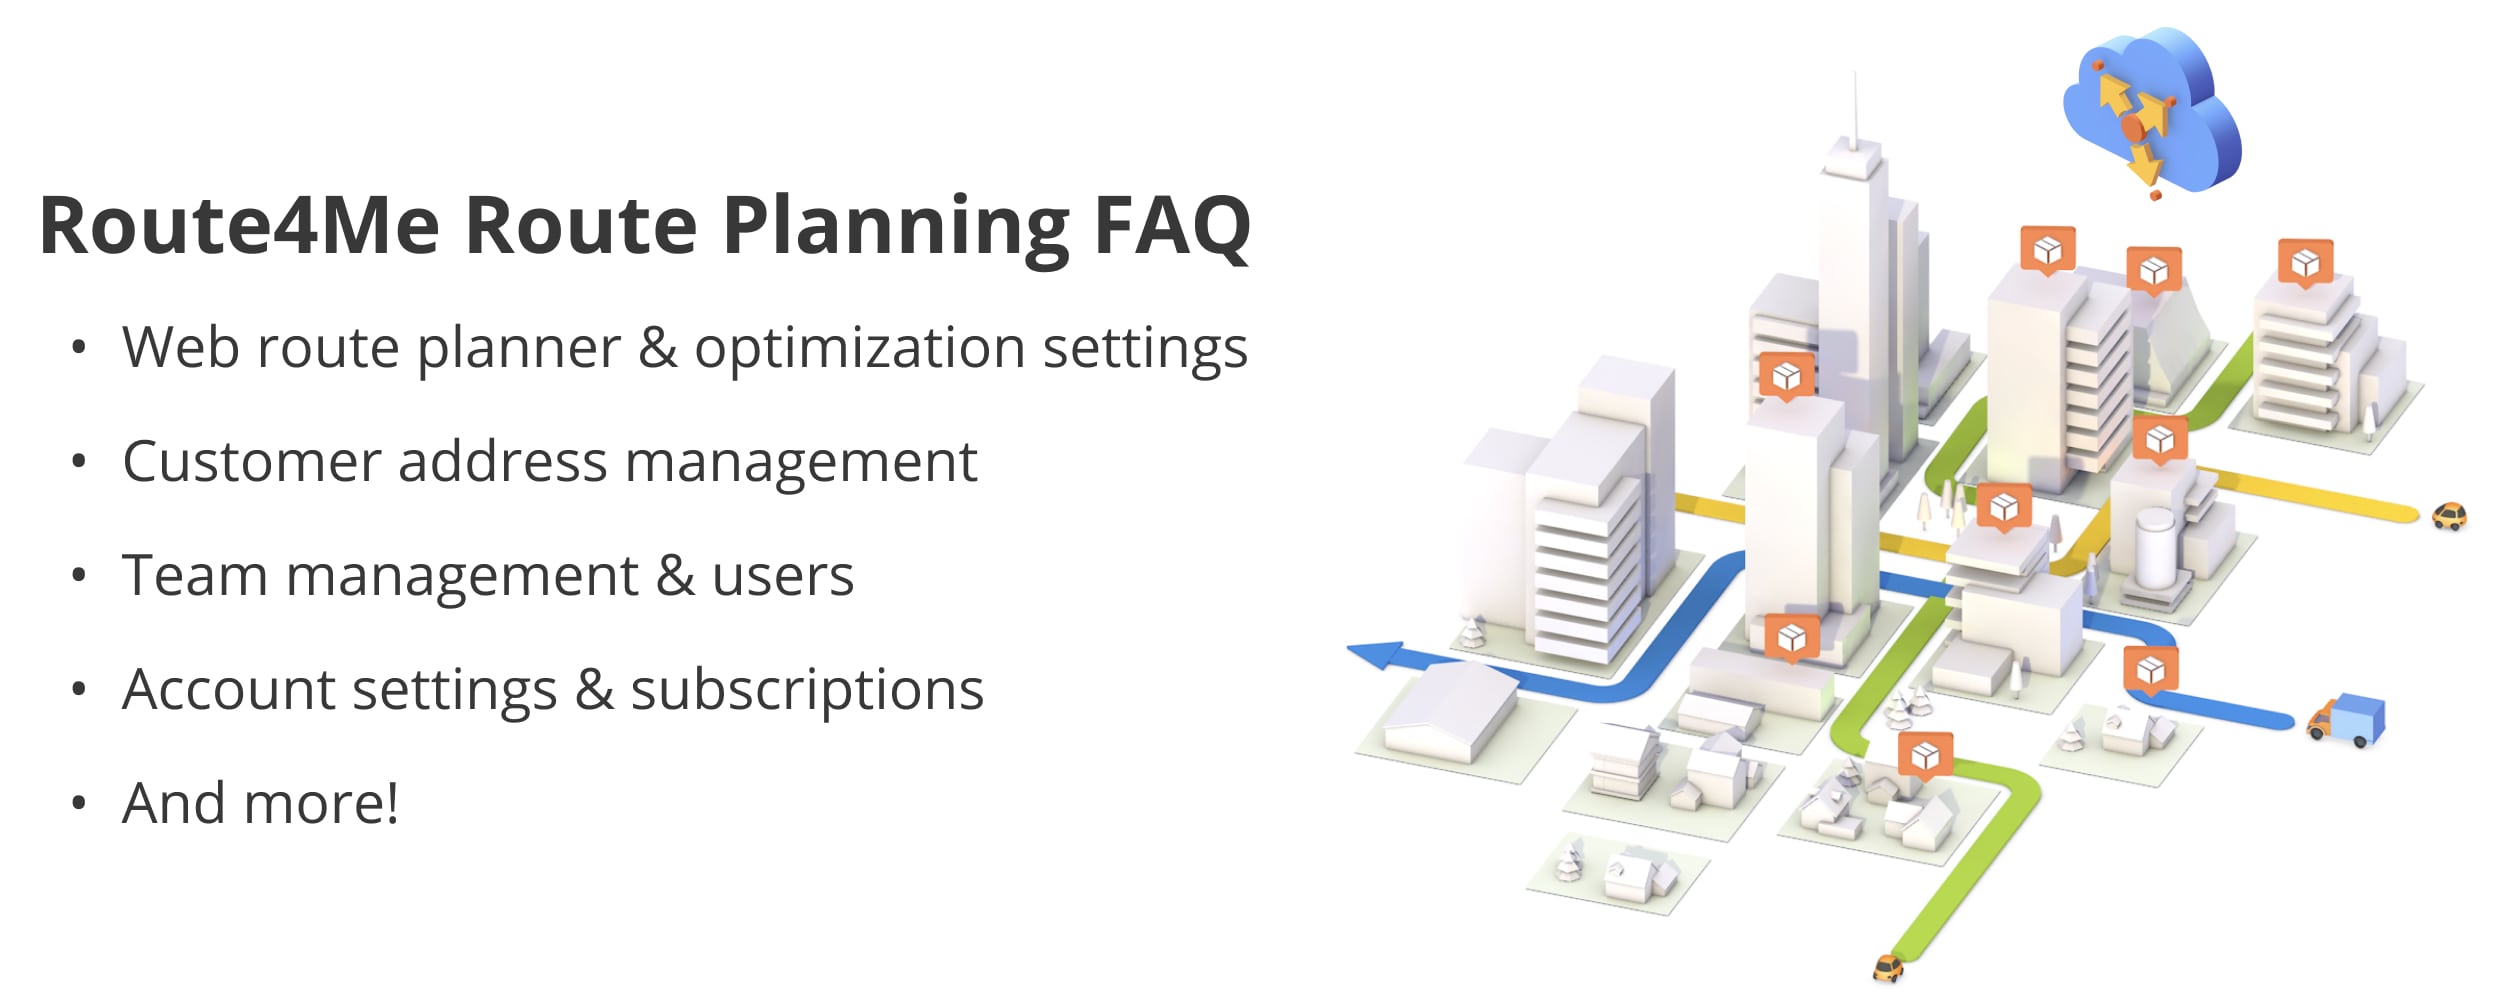 Web route planning FAQ - subscriptions, users, route management, route optimization settings, etc.